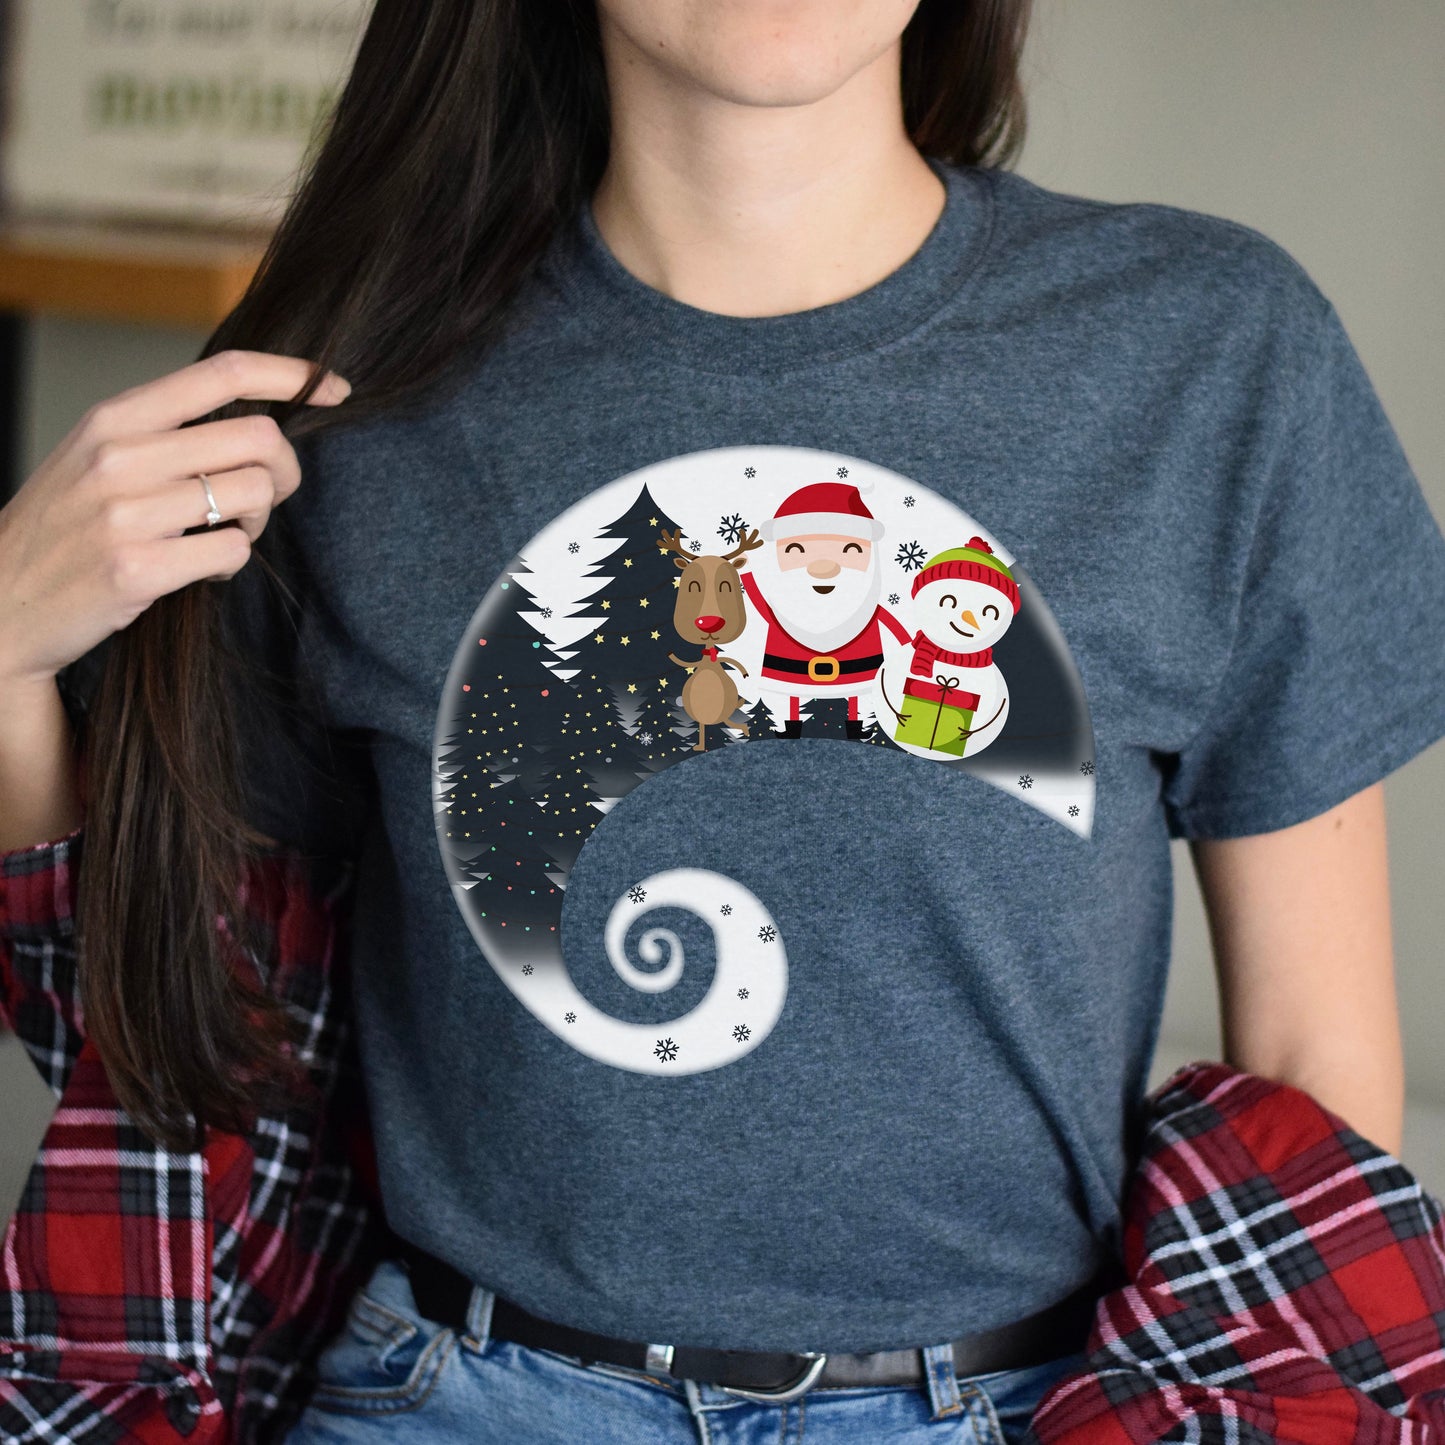 Cute Christmas Unisex shirt winter Holiday tee Black Dark Heather-Dark Heather-Family-Gift-Planet